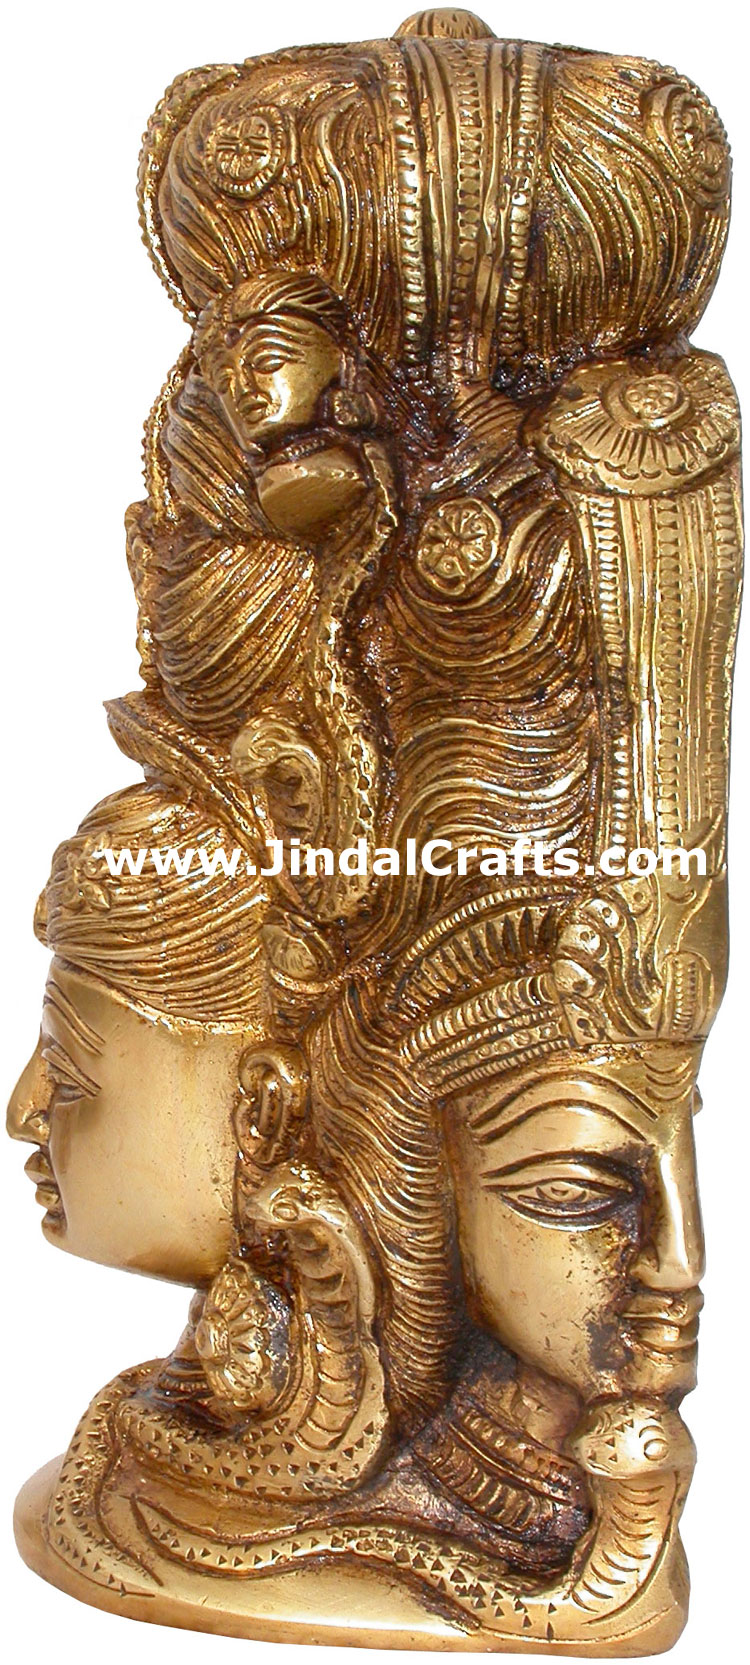 Masterpiece Exclusive Hindu Deity Shiva Parvati India Brass Statue Idol Figure